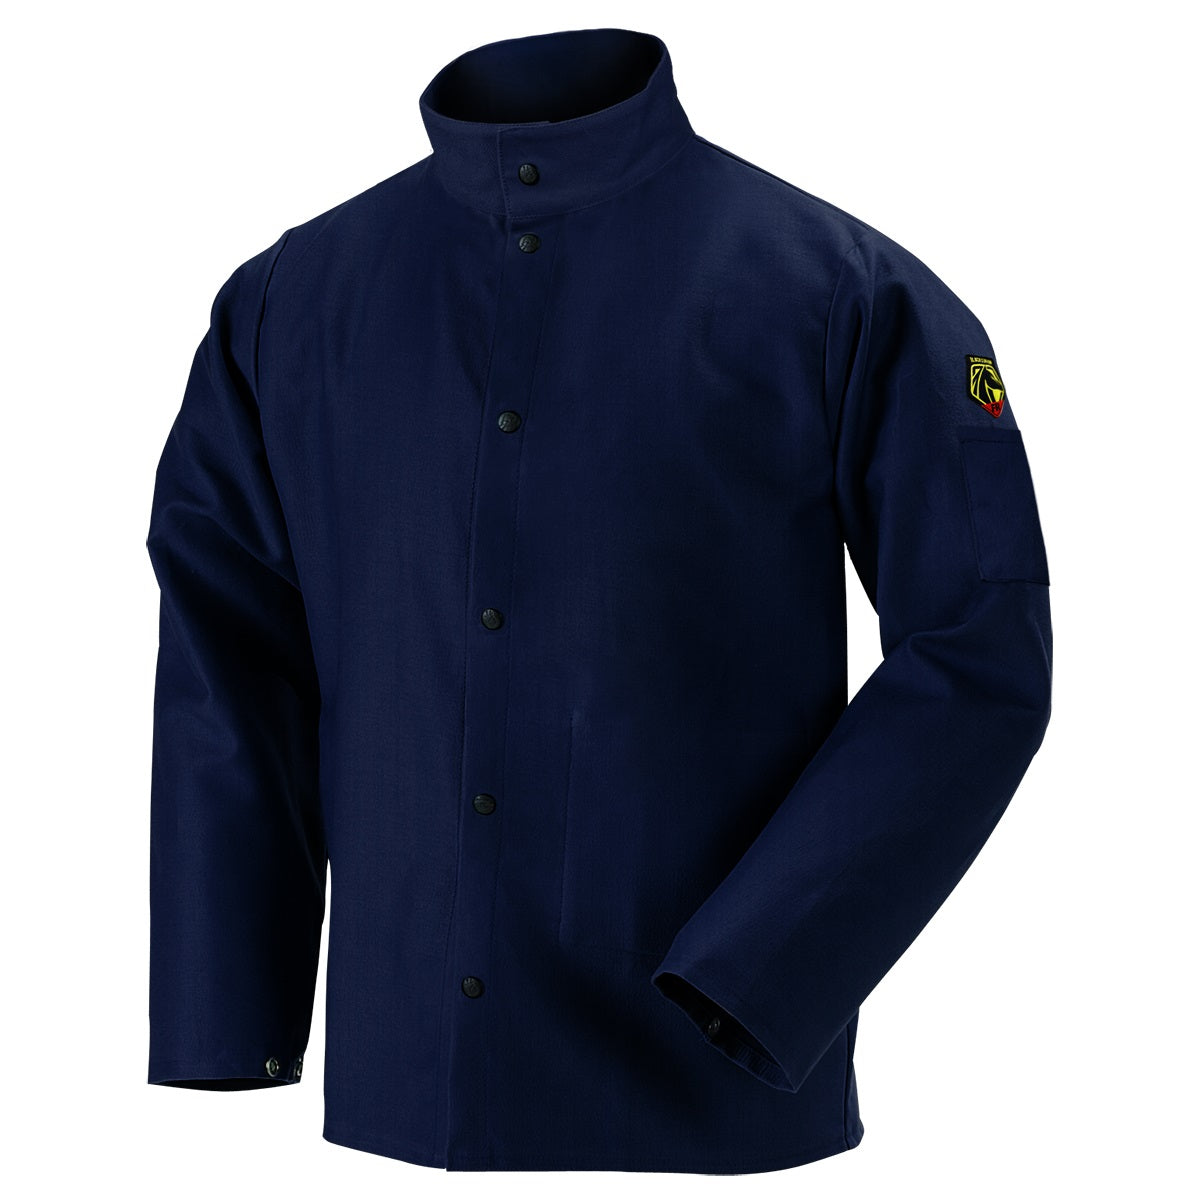 Revco Black Stallion TruGuard 200 9oz Navy FR Cotton Welding Jacket for ...